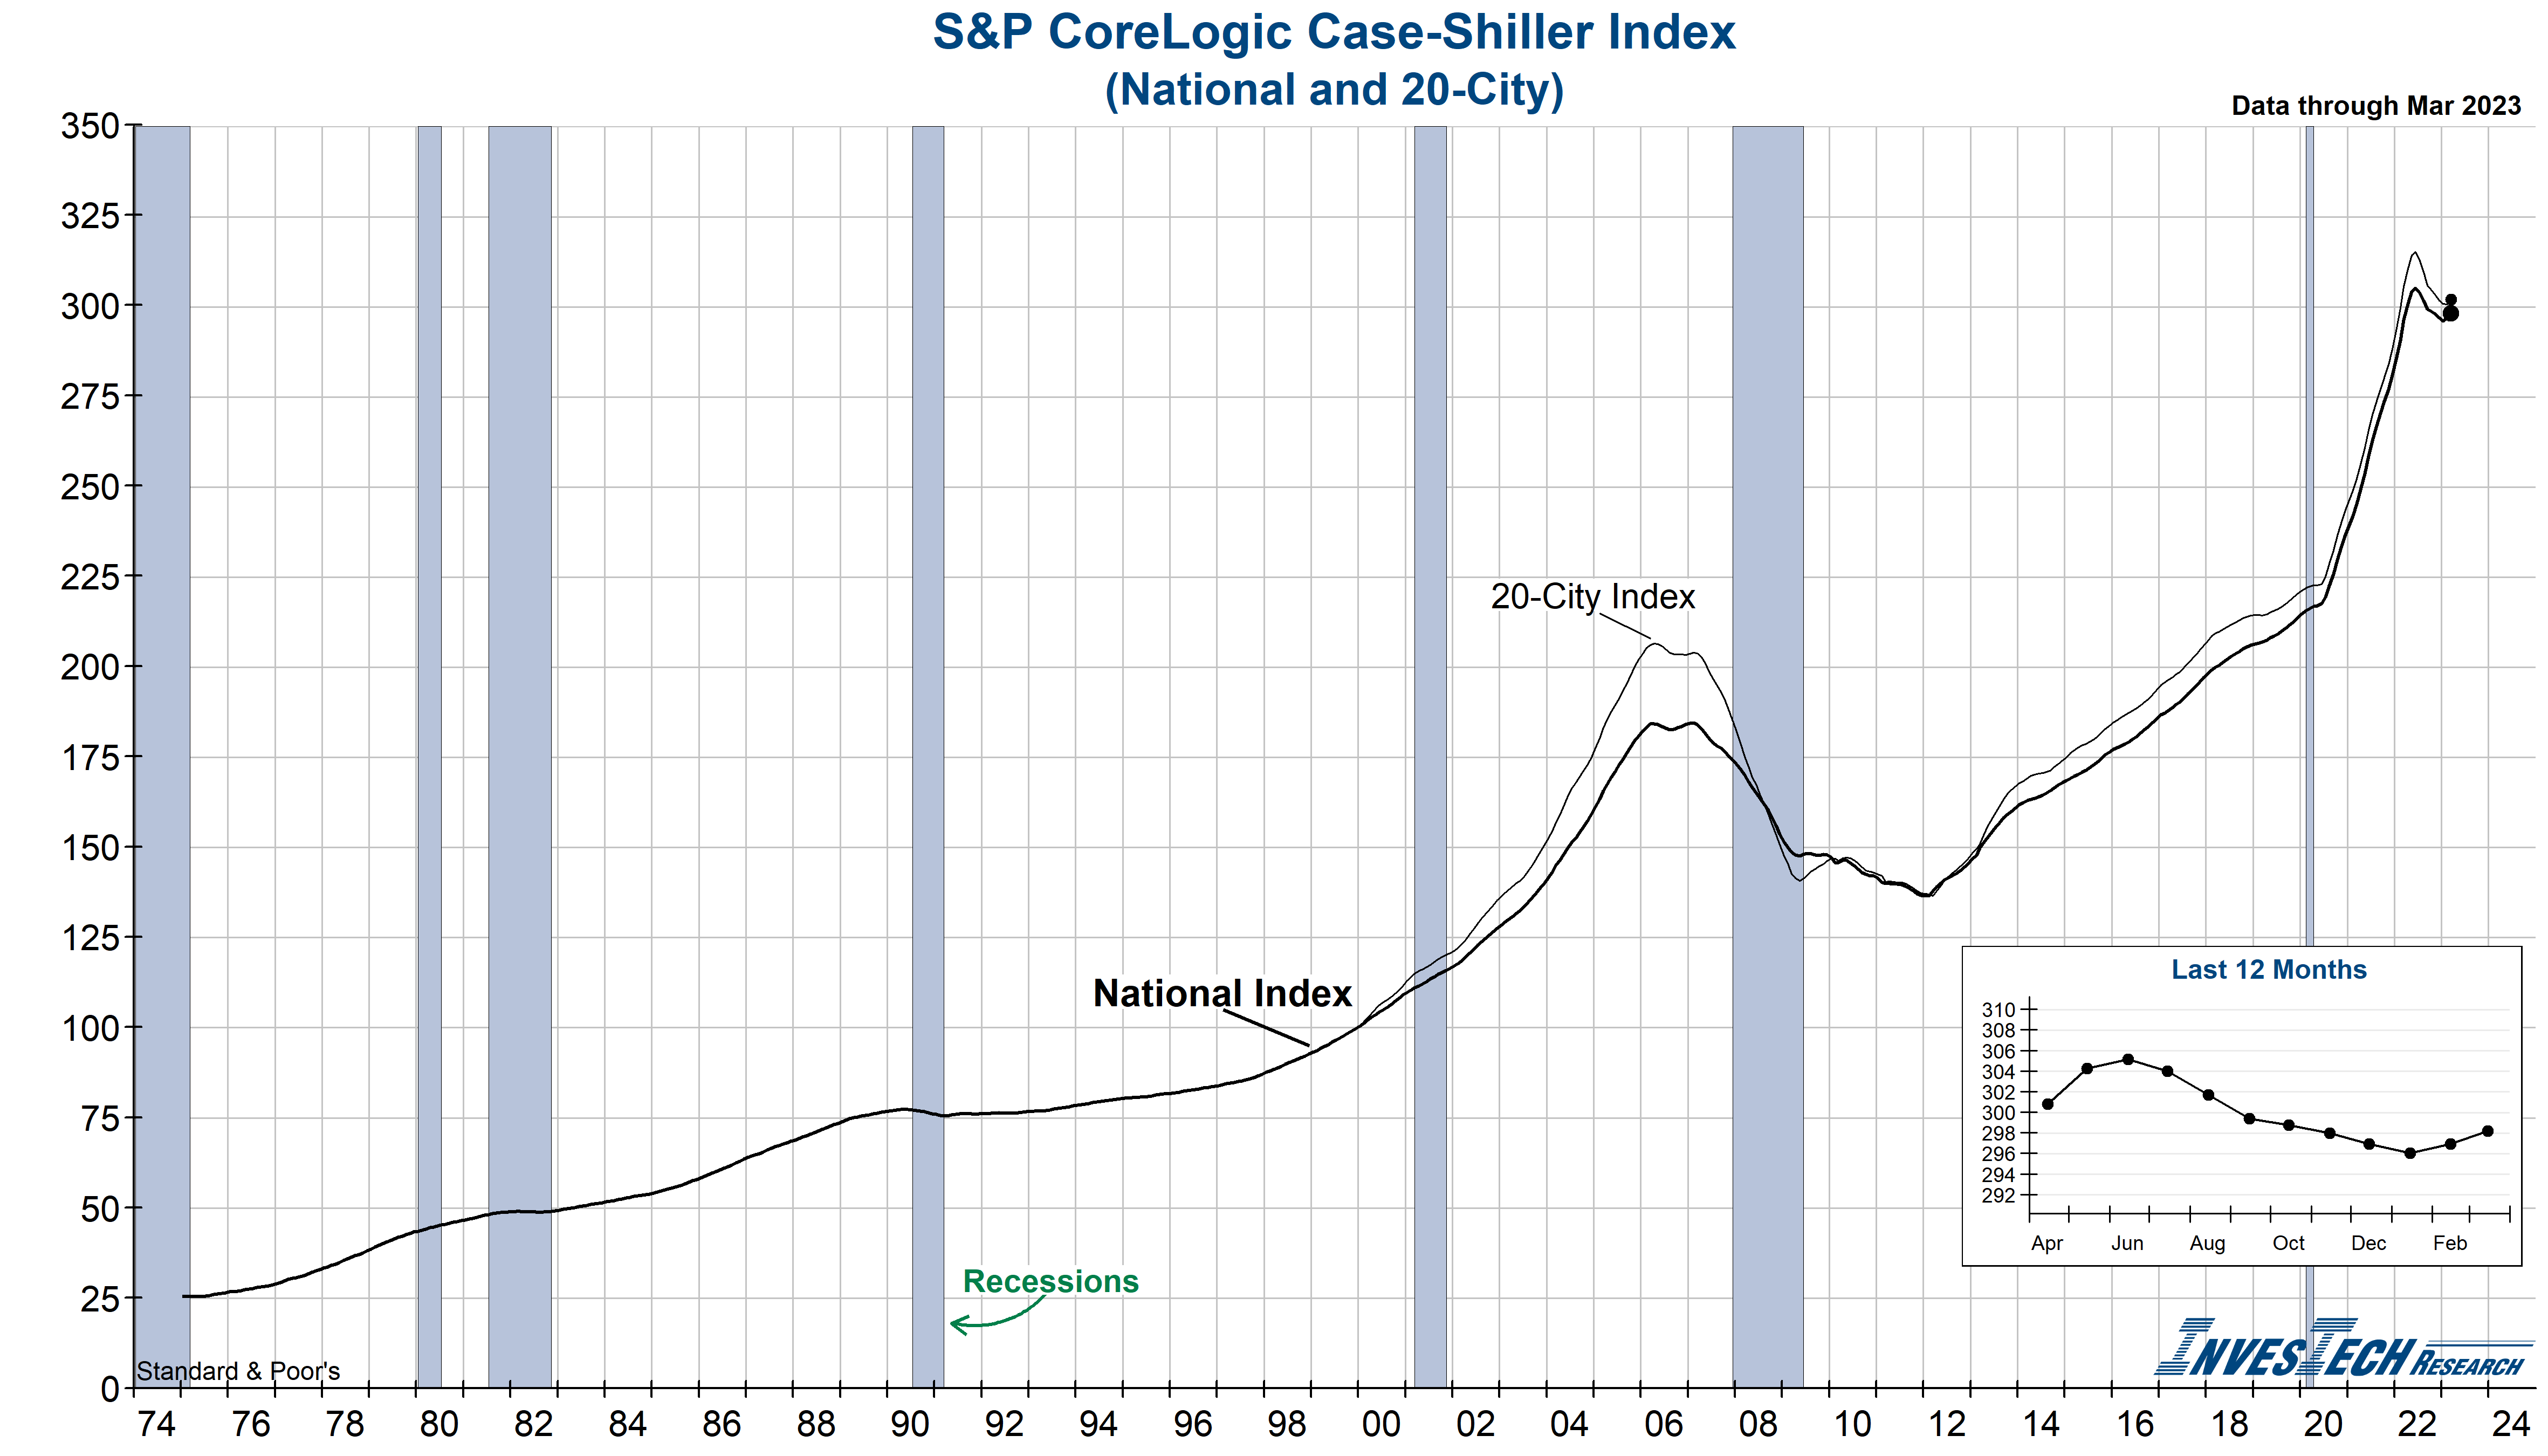 S&P CoreLogic Case-Shiller House Price Index